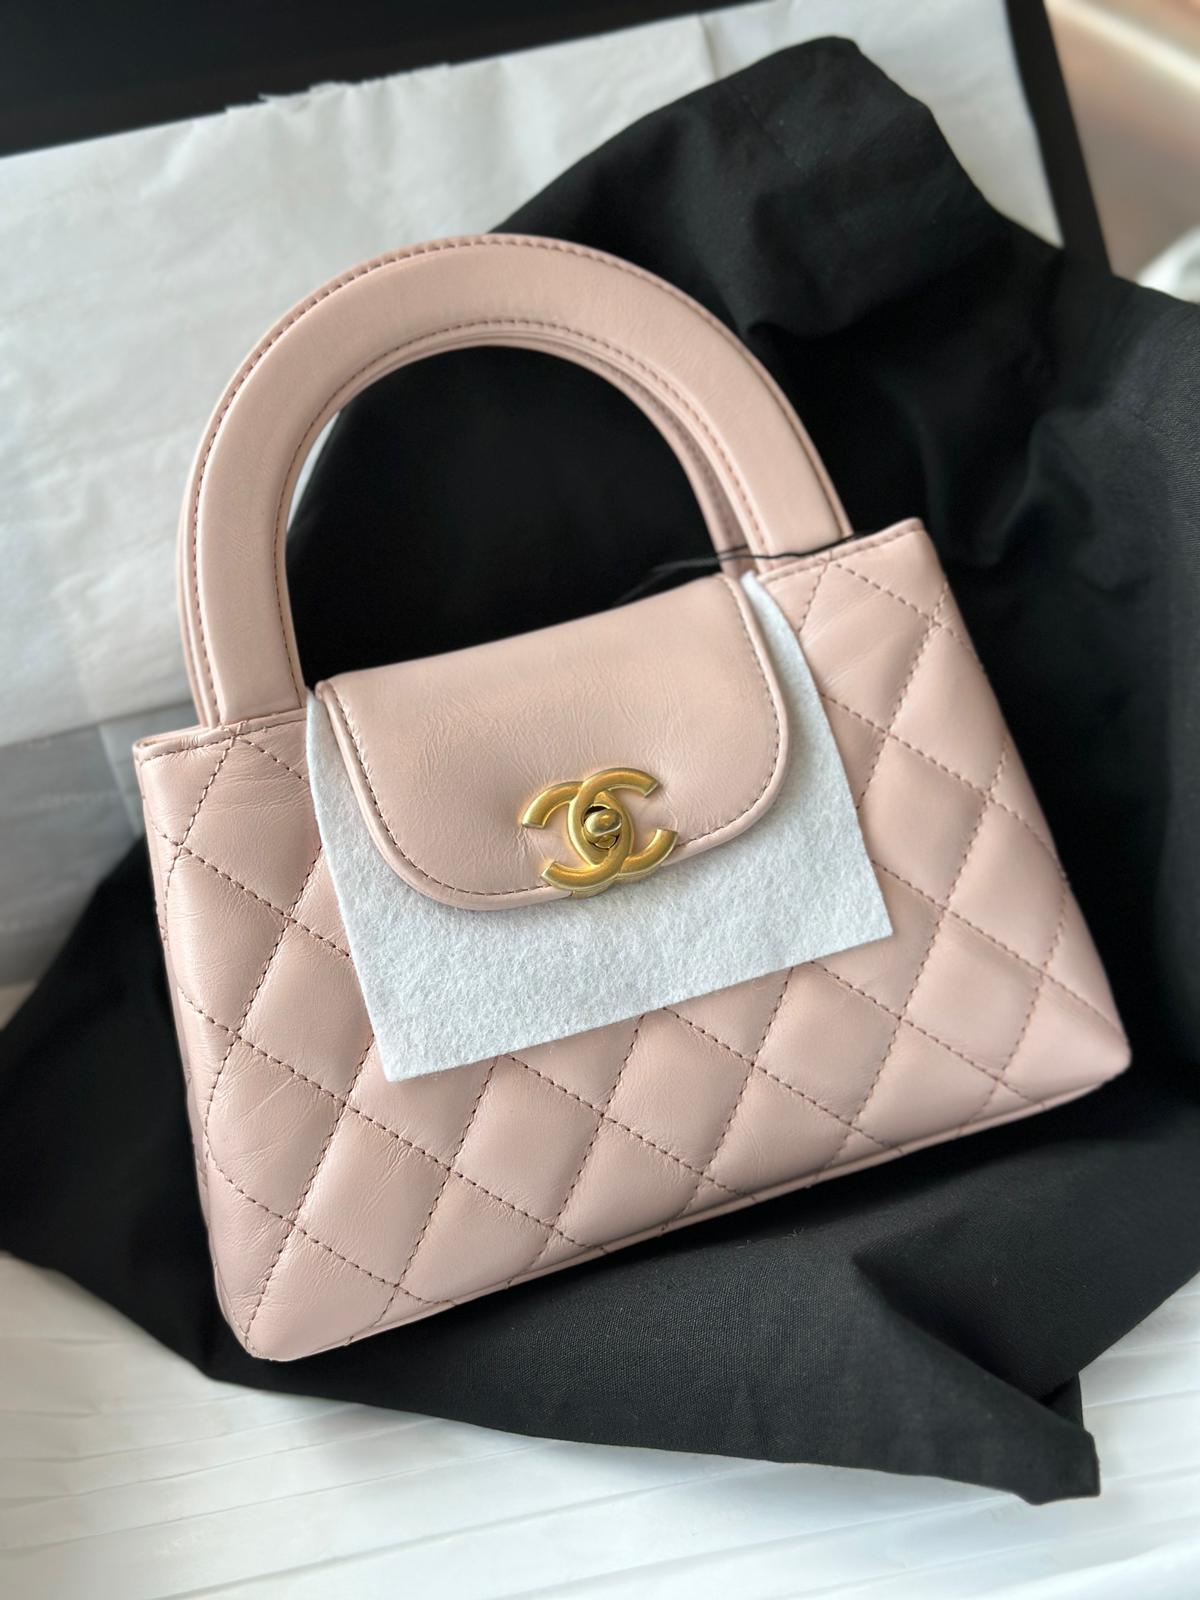 buy now chanel handbags